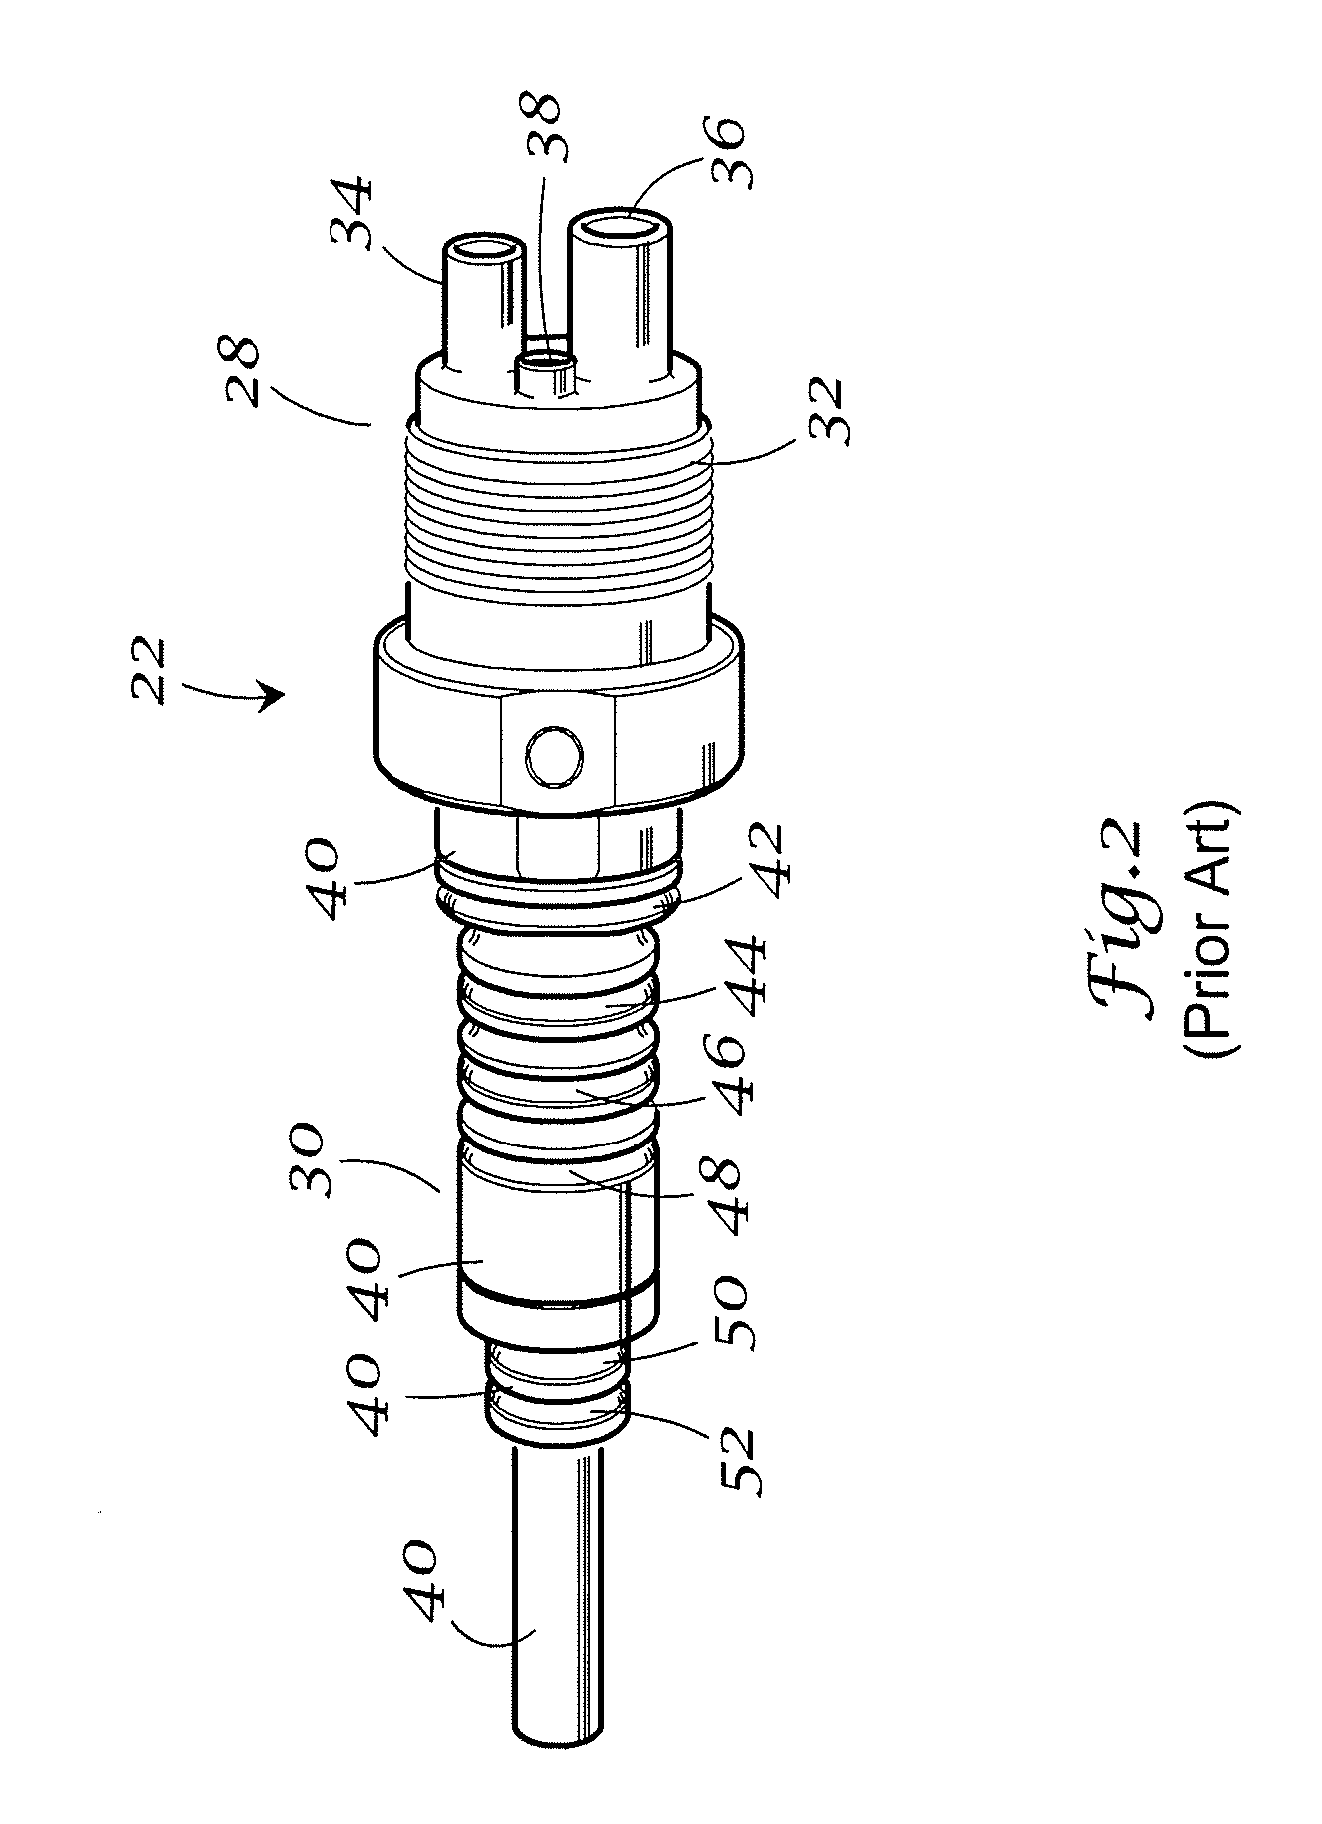 Angled hose connection for dental handpiece